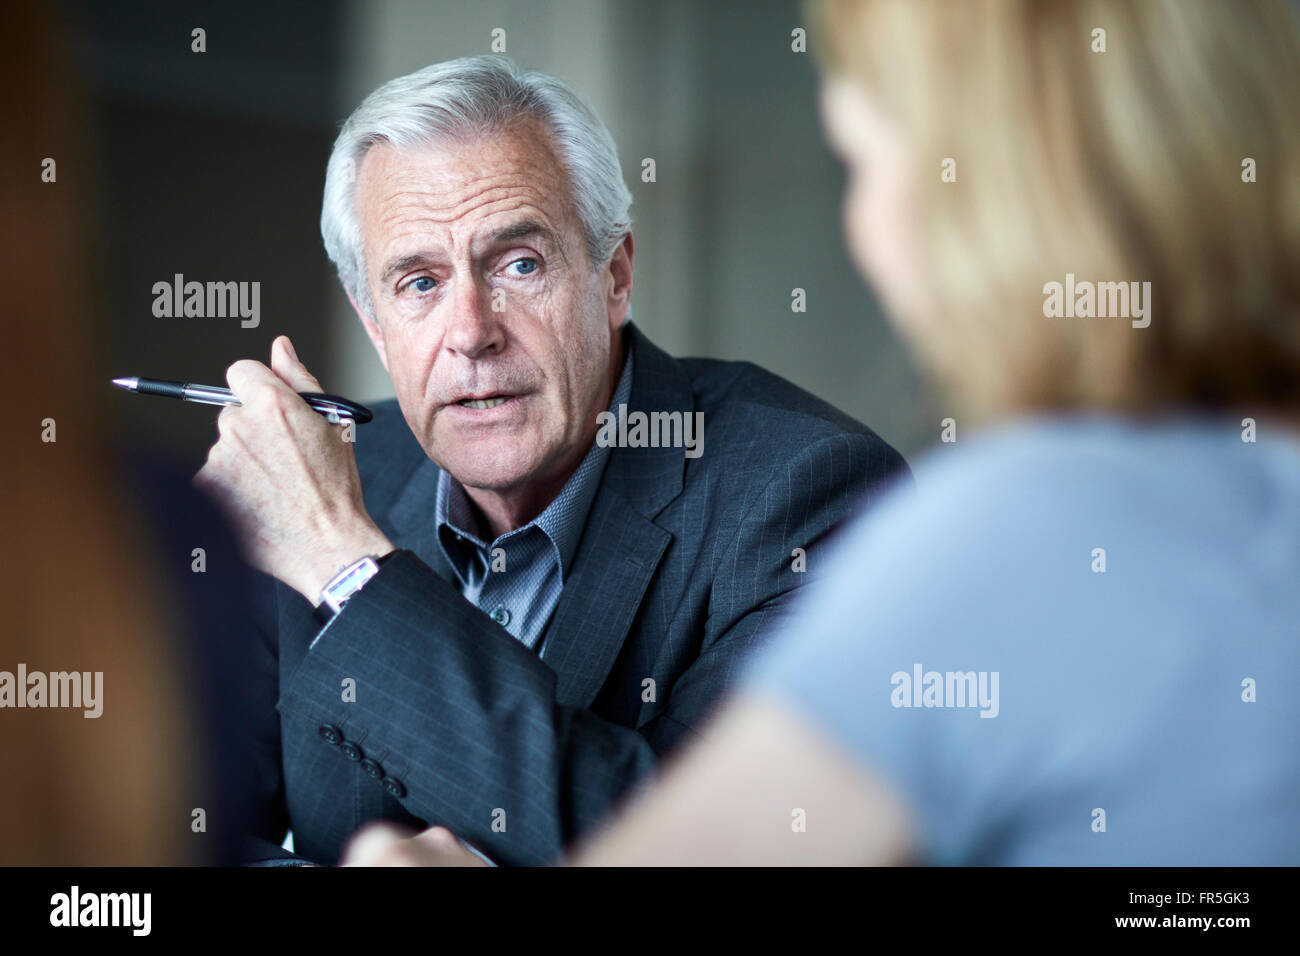 Senior businessman listening to businesswoman in meeting Stock Photo